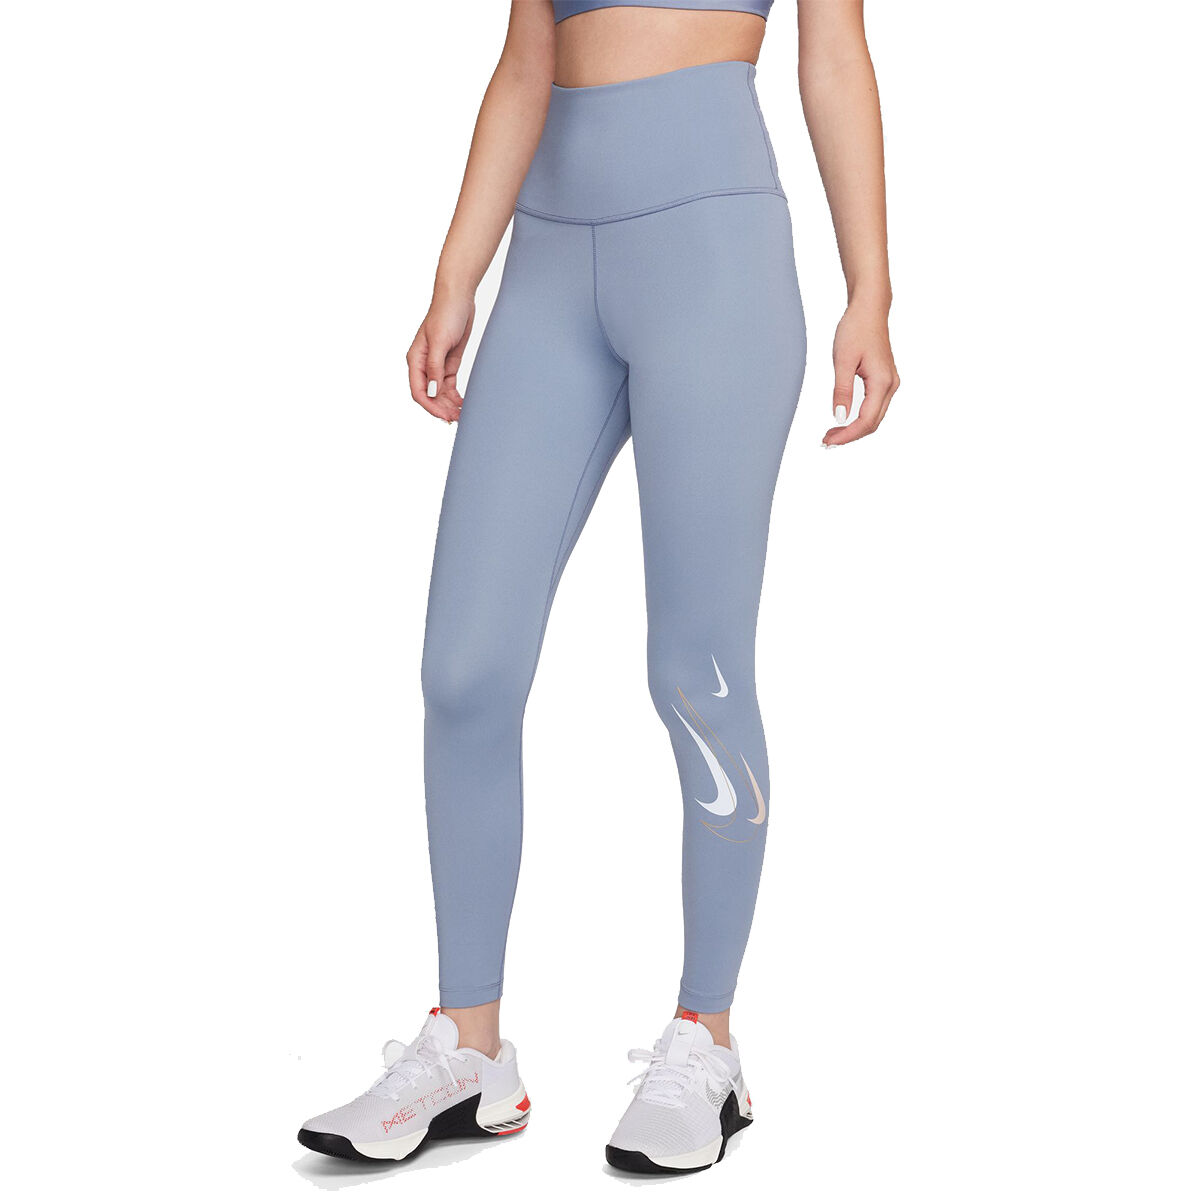 Nike Pro Bash Capris Pedal Pushers Women XS Running Tights Blue